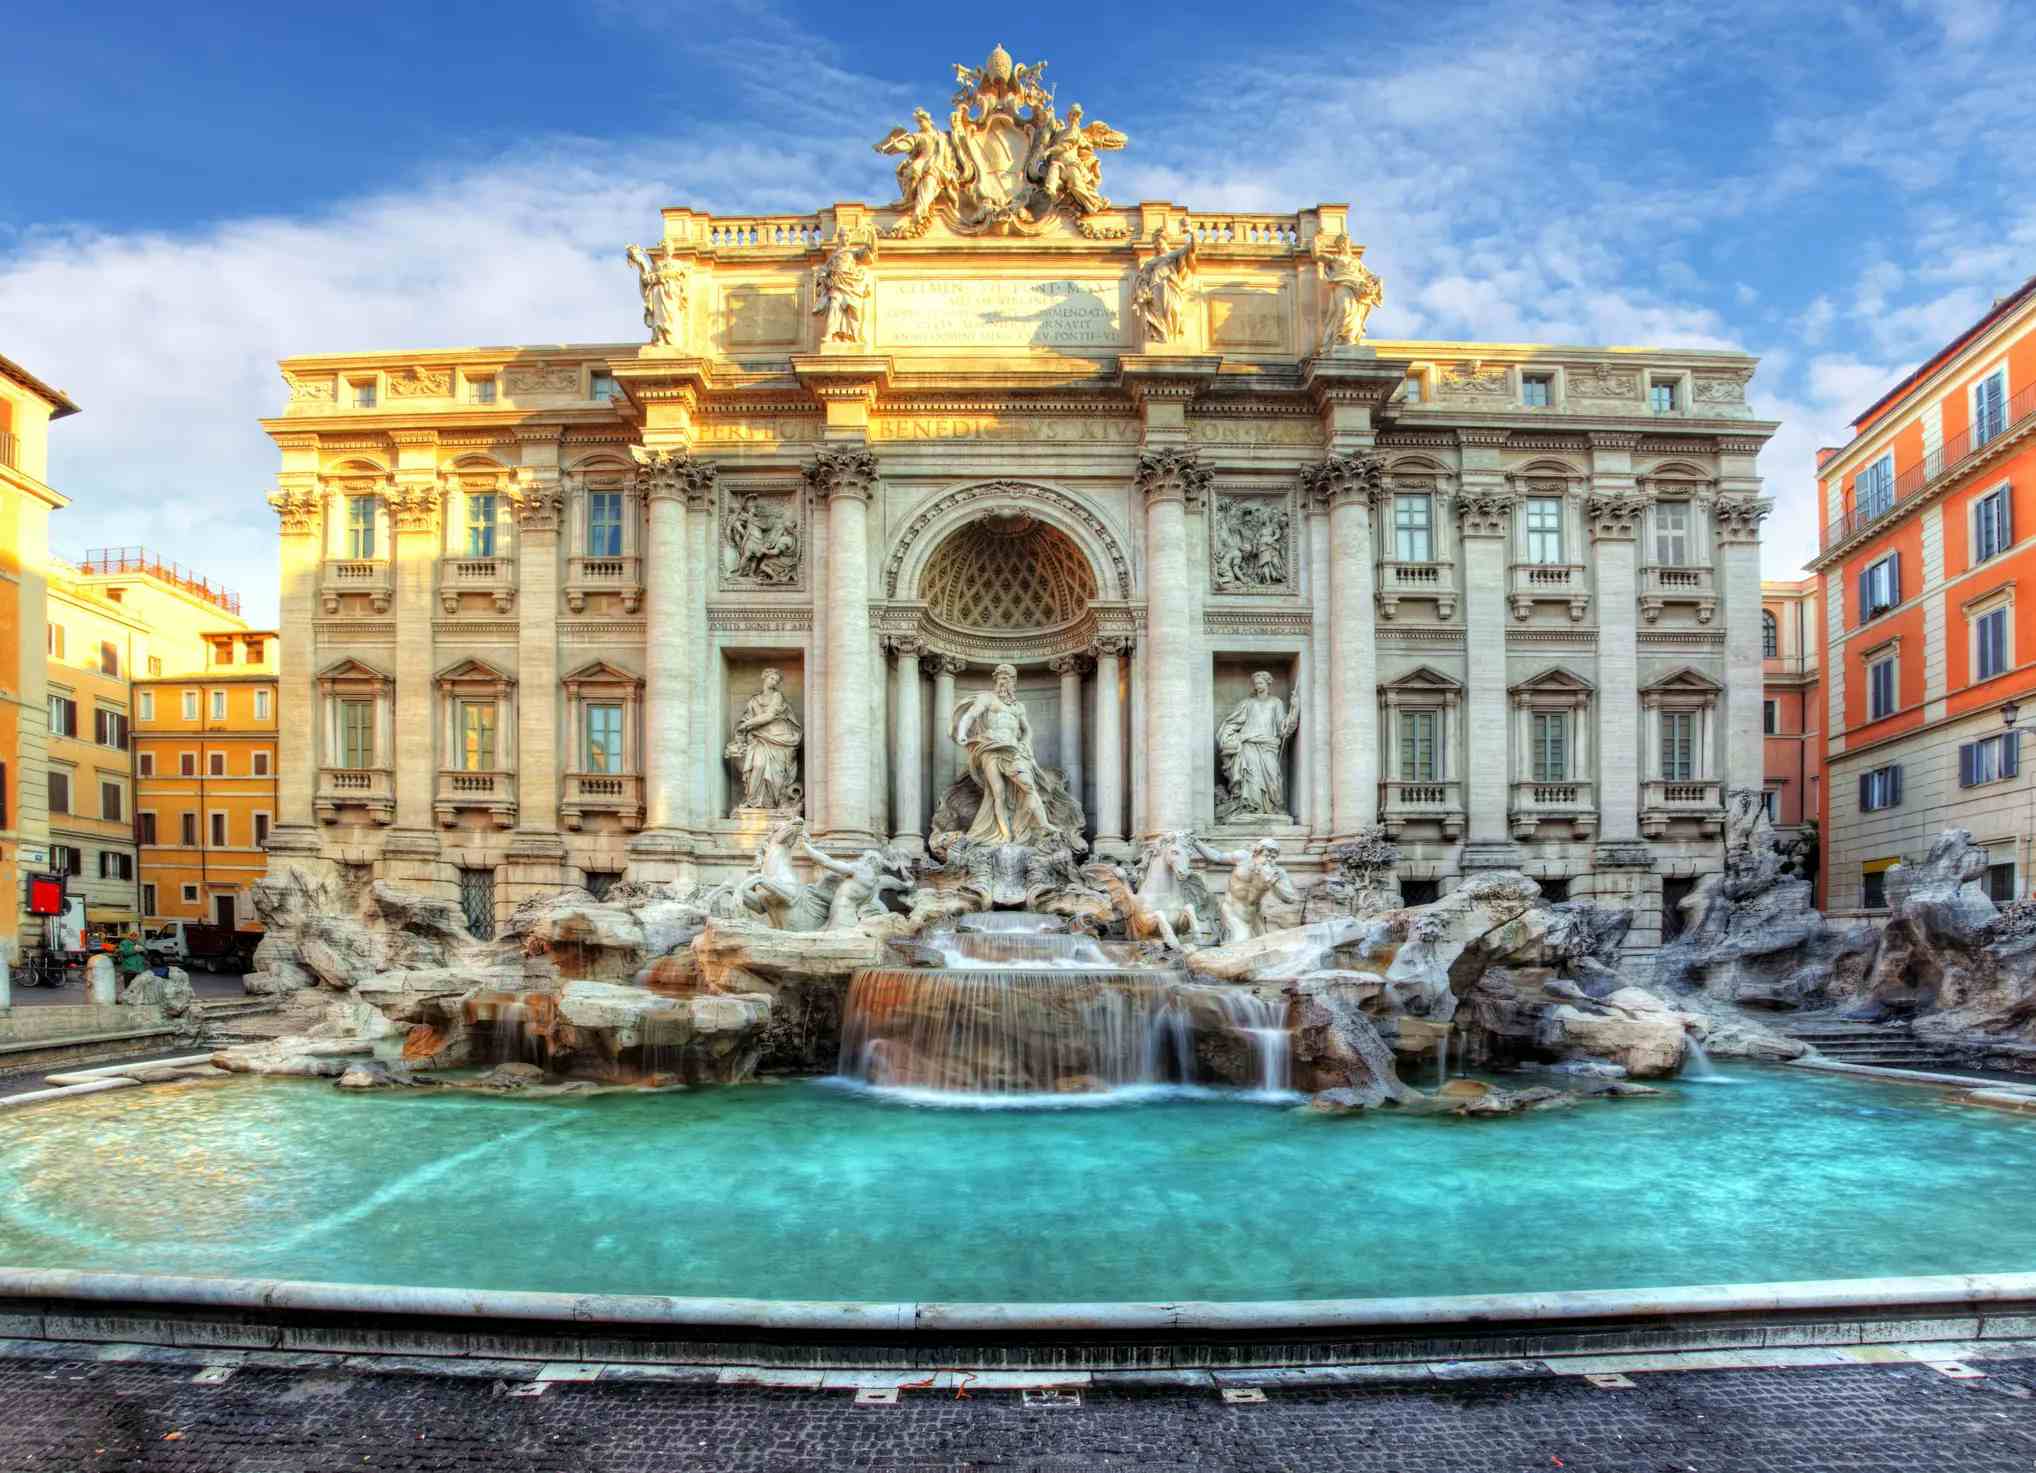 Trevi Fountain image